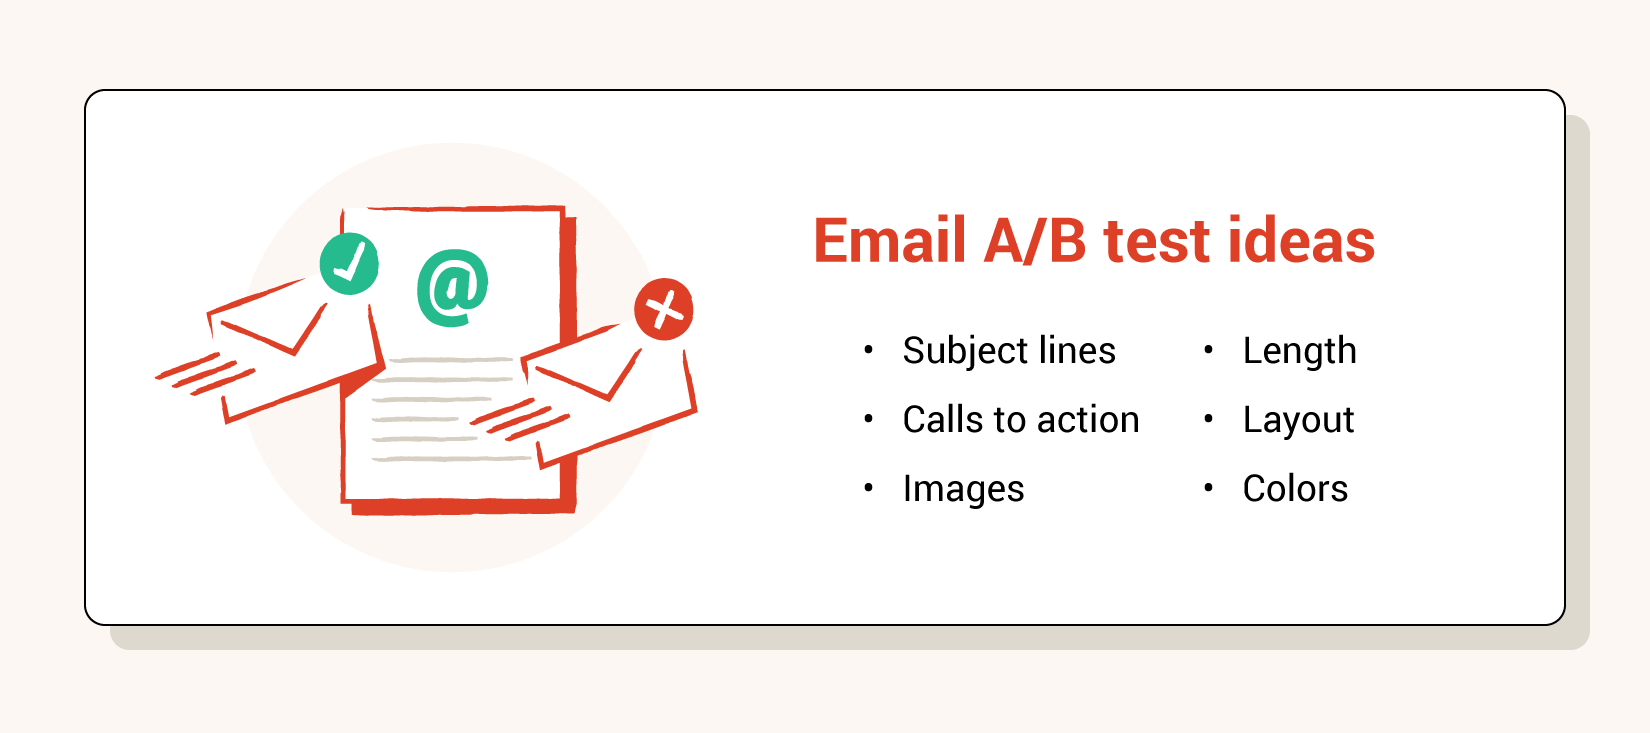 Email A/B test ideas